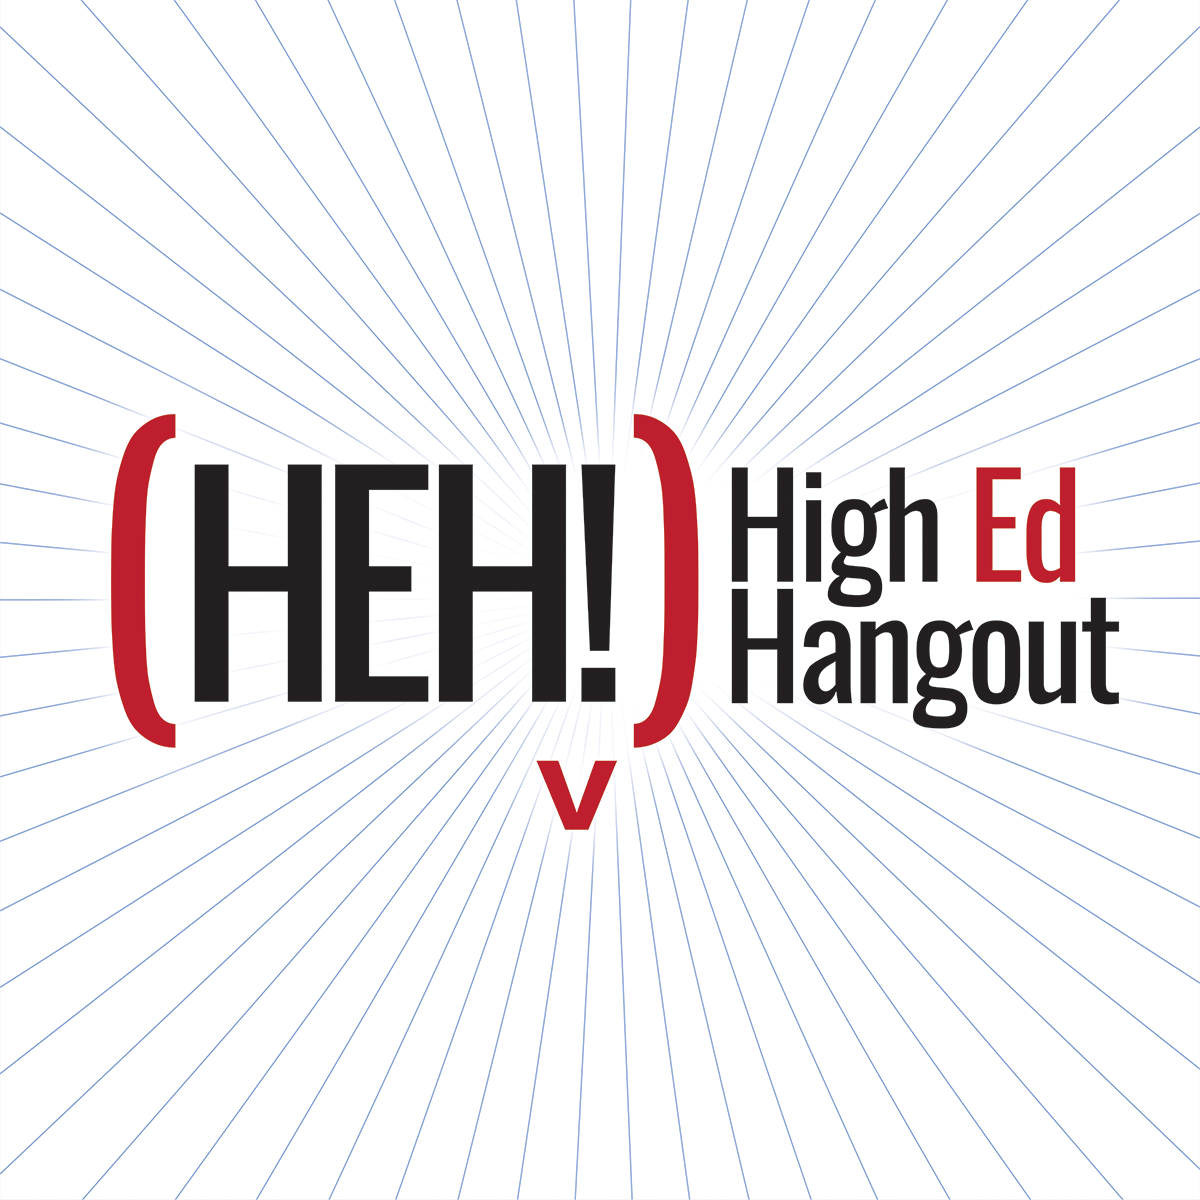 High Ed Hangout